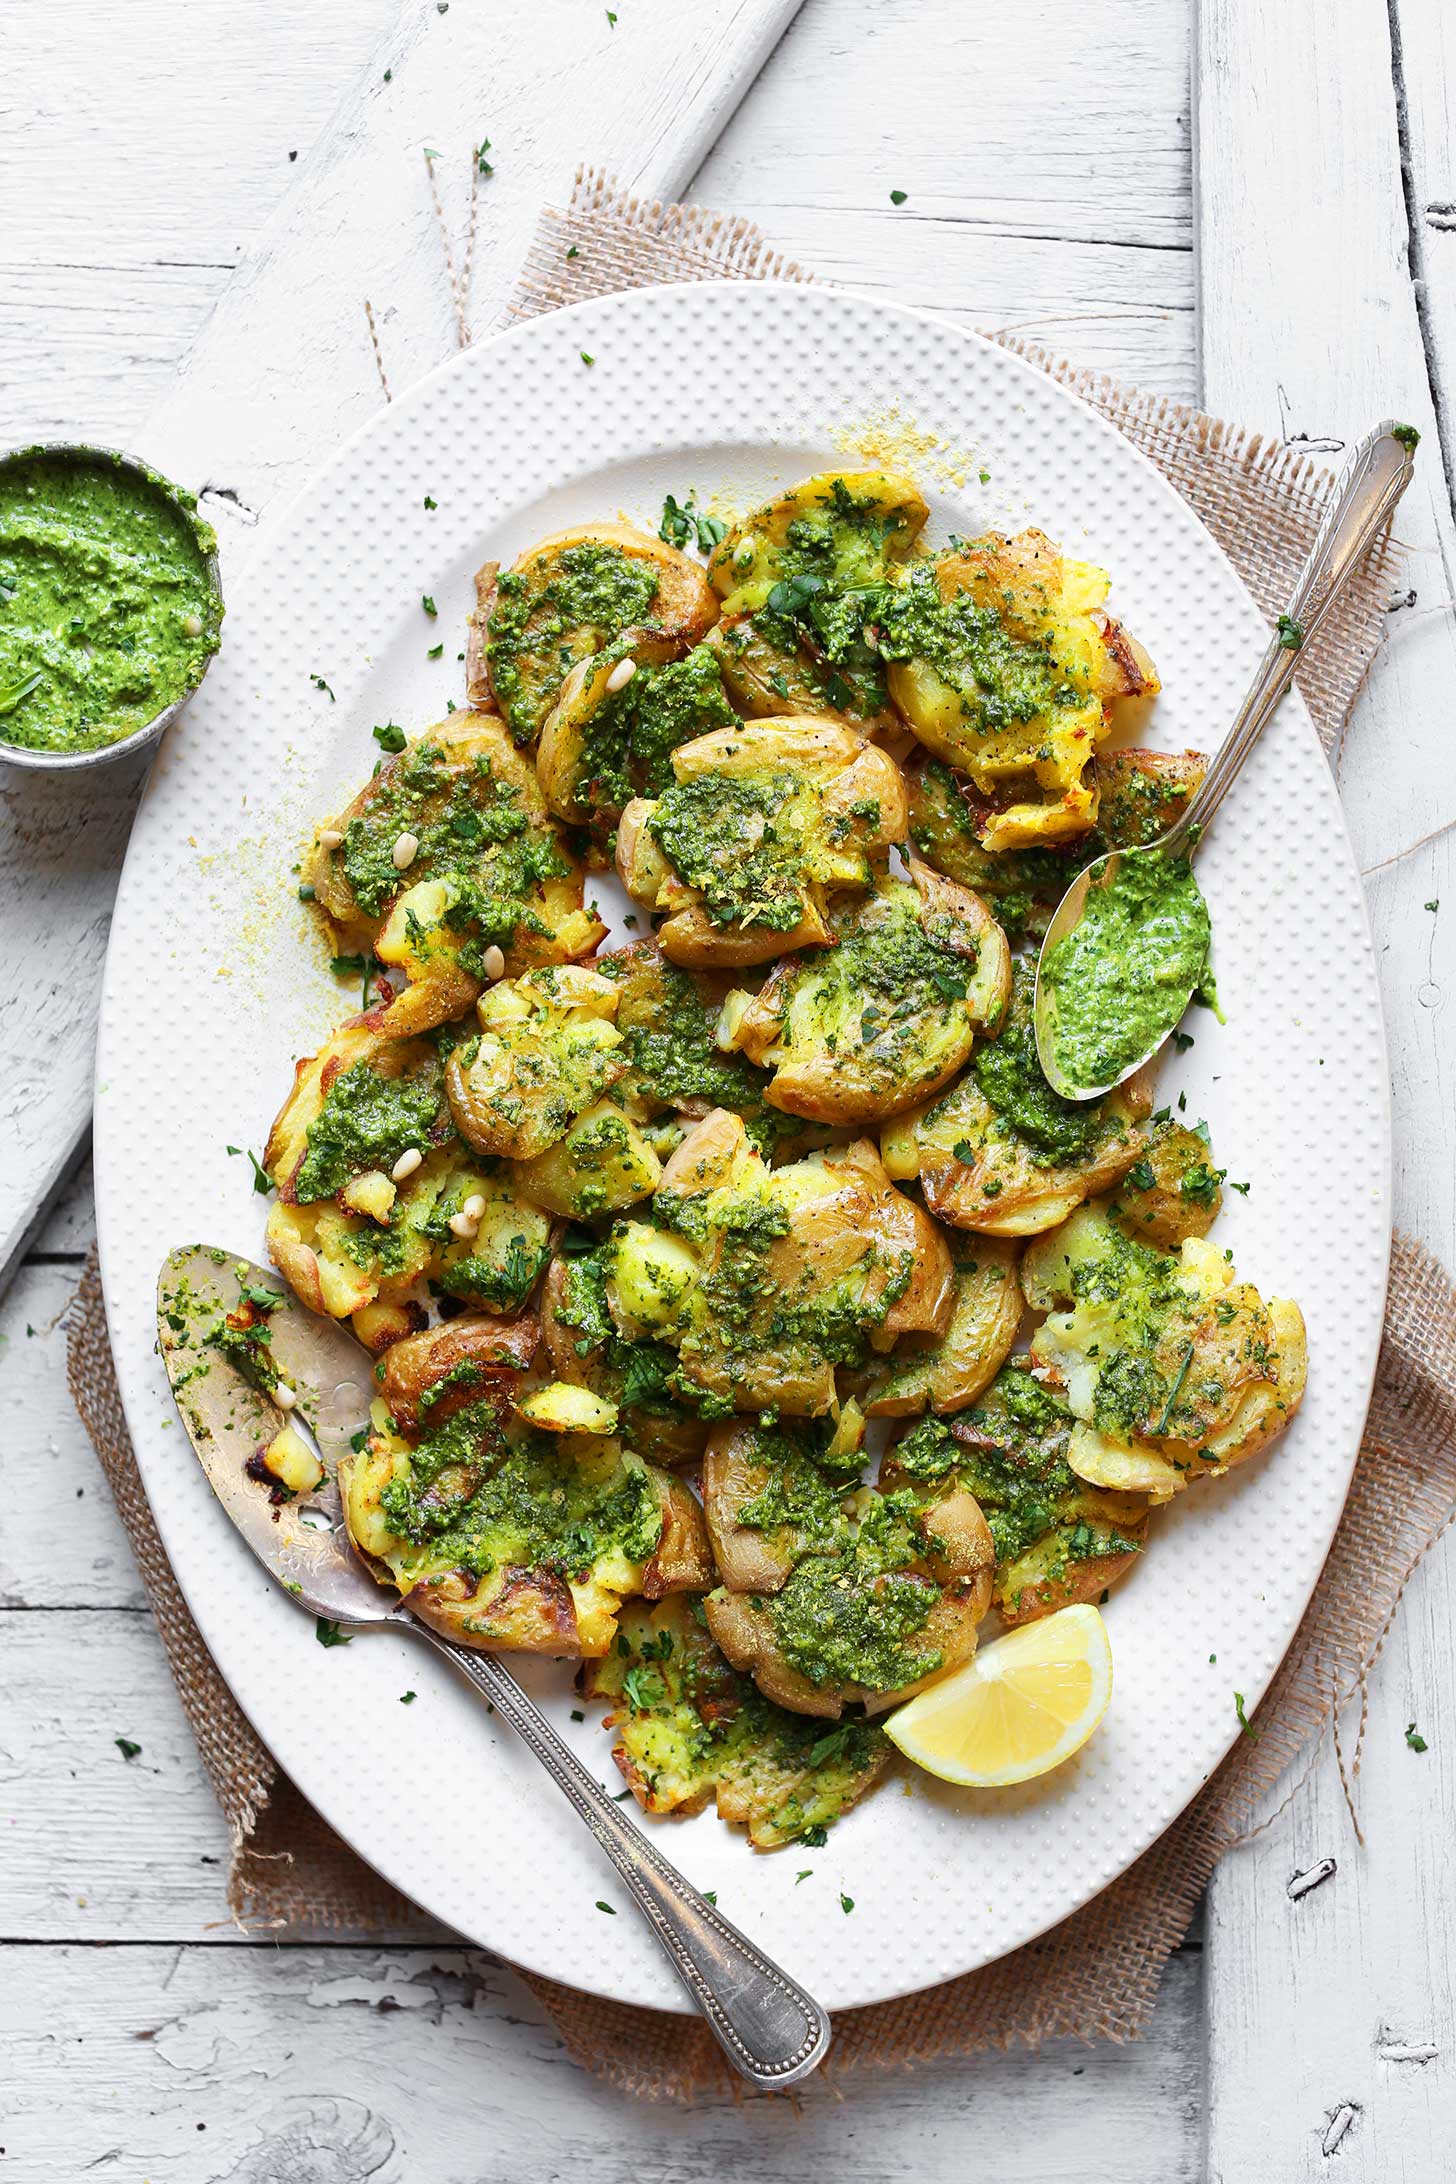 Platter full of Smashed Potatoes with Garlic Herb Pesto for an amazing vegan side dish